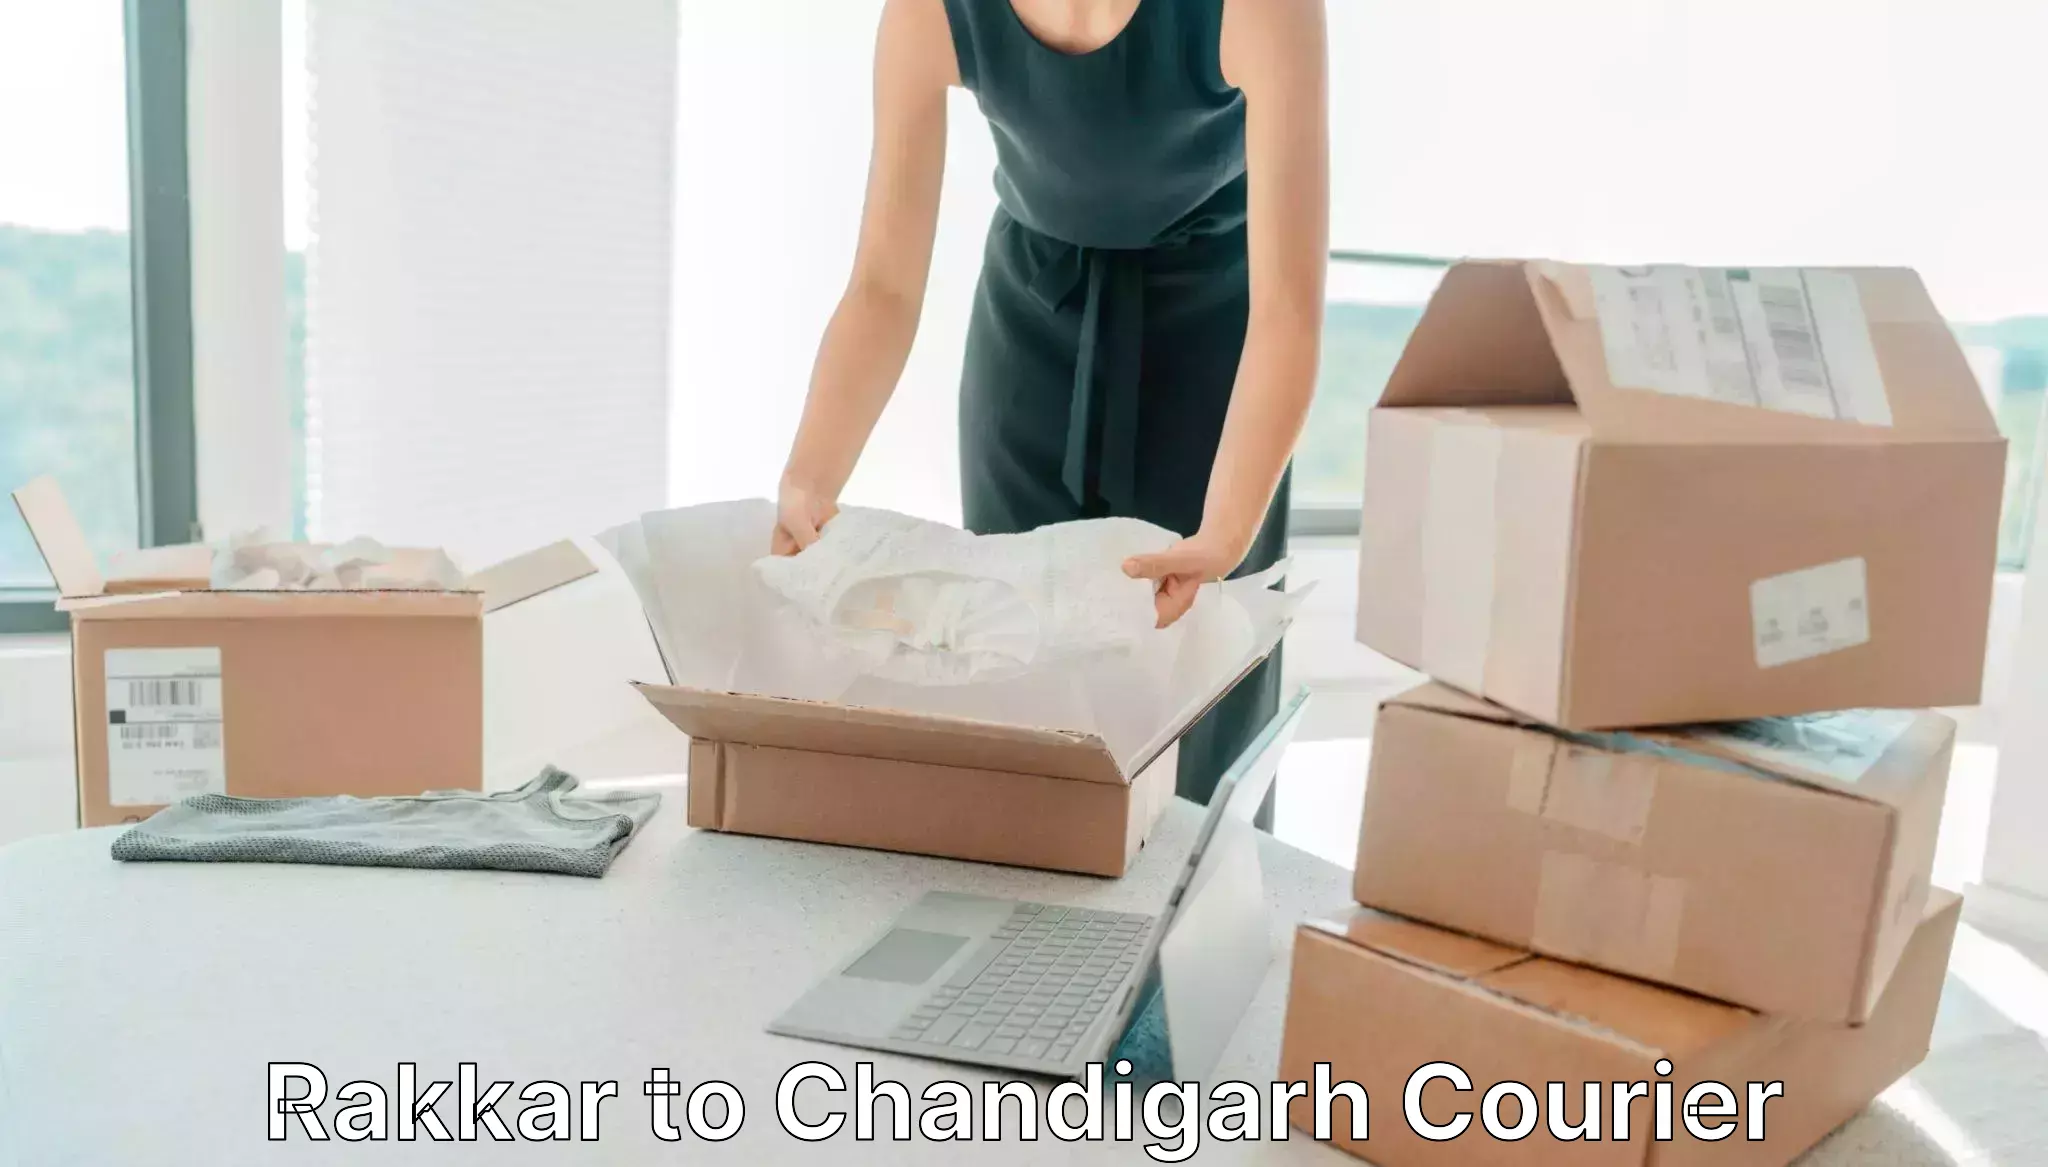 Affordable parcel service Rakkar to Chandigarh